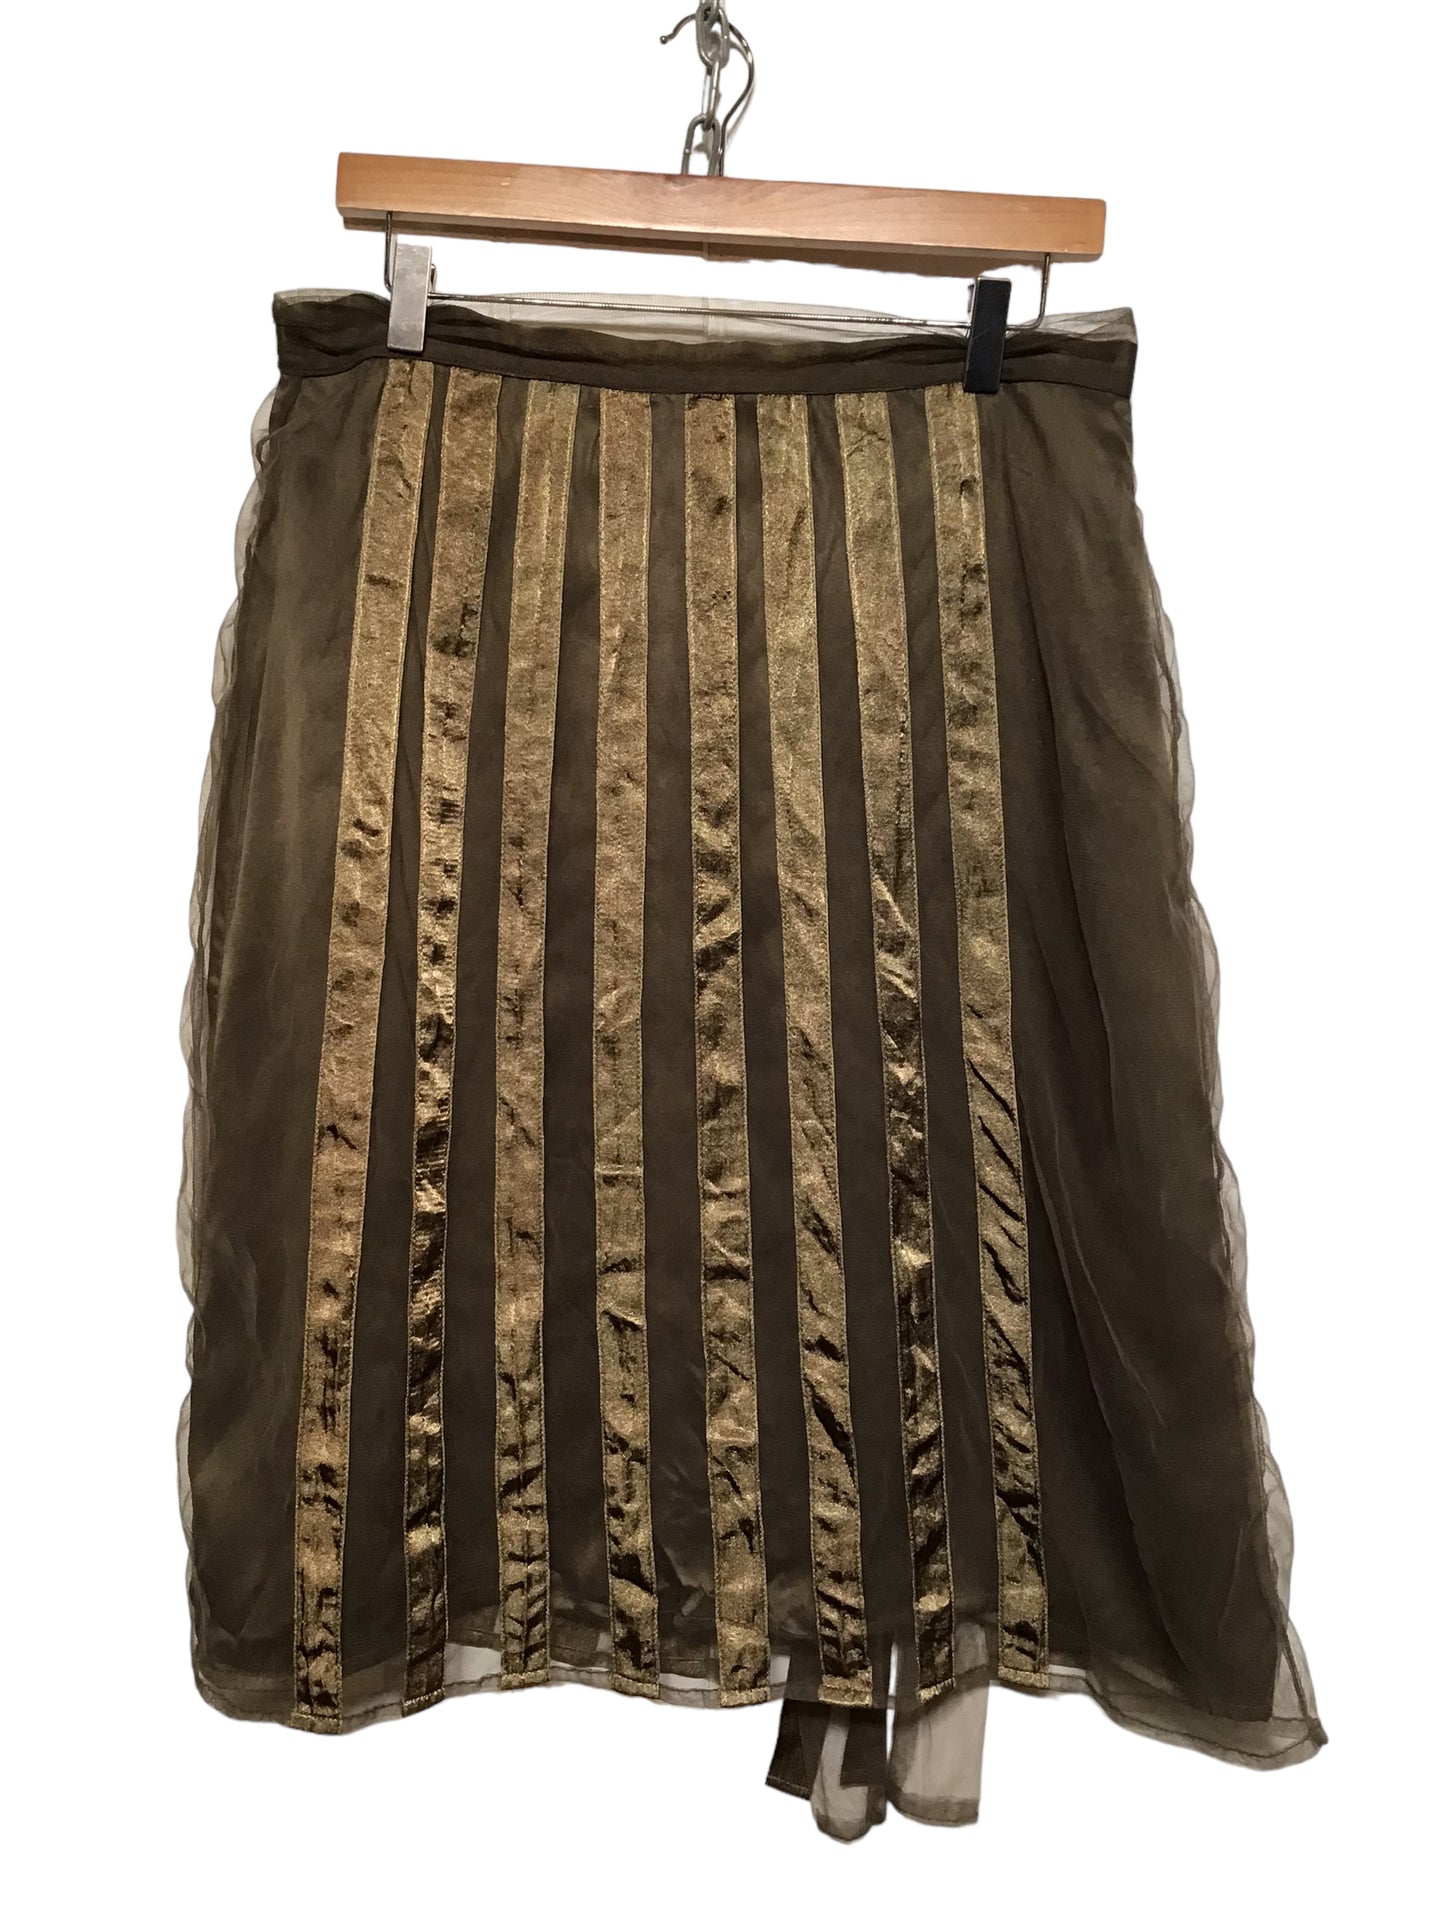 Khaki Green Mesh Skirt (Size L)